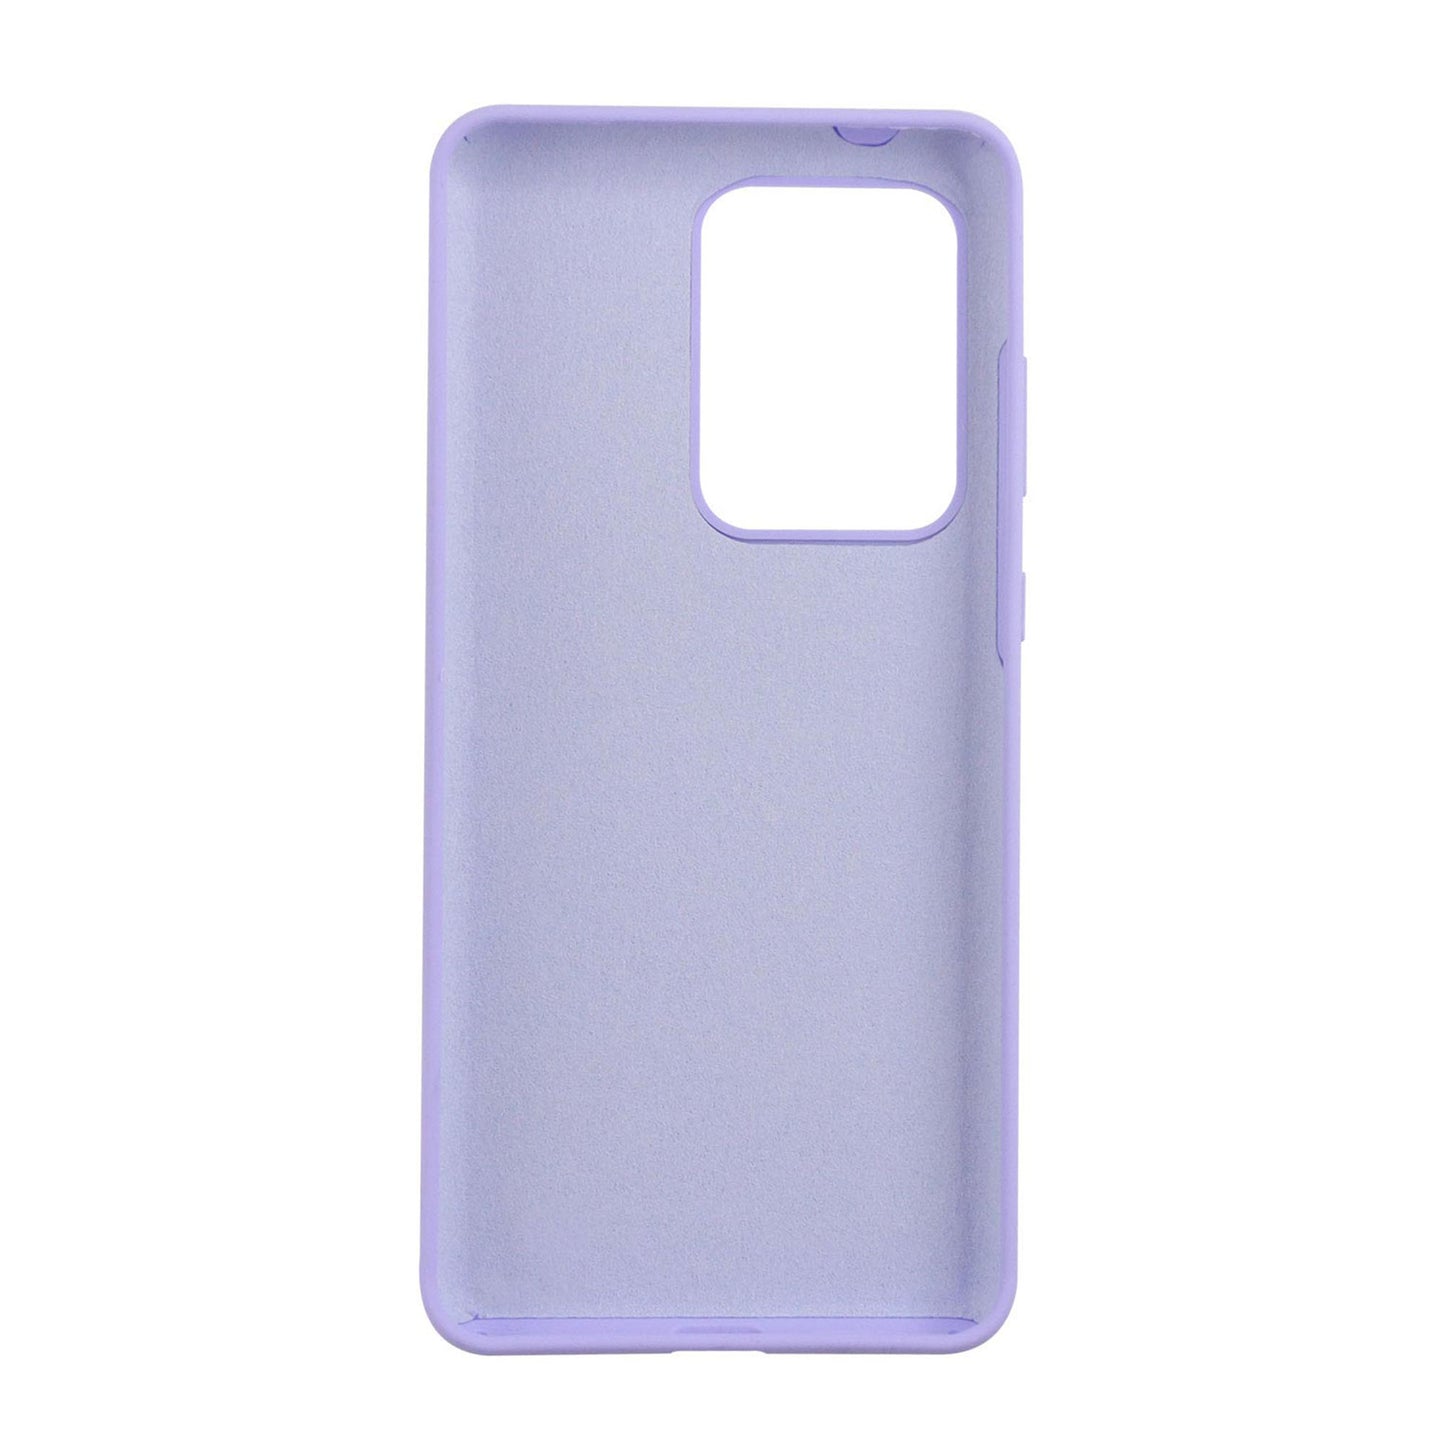 Samsung Galaxy S20+ 5G Uunique Purple (Lavender) Liquid Silicone Case - 15-06633